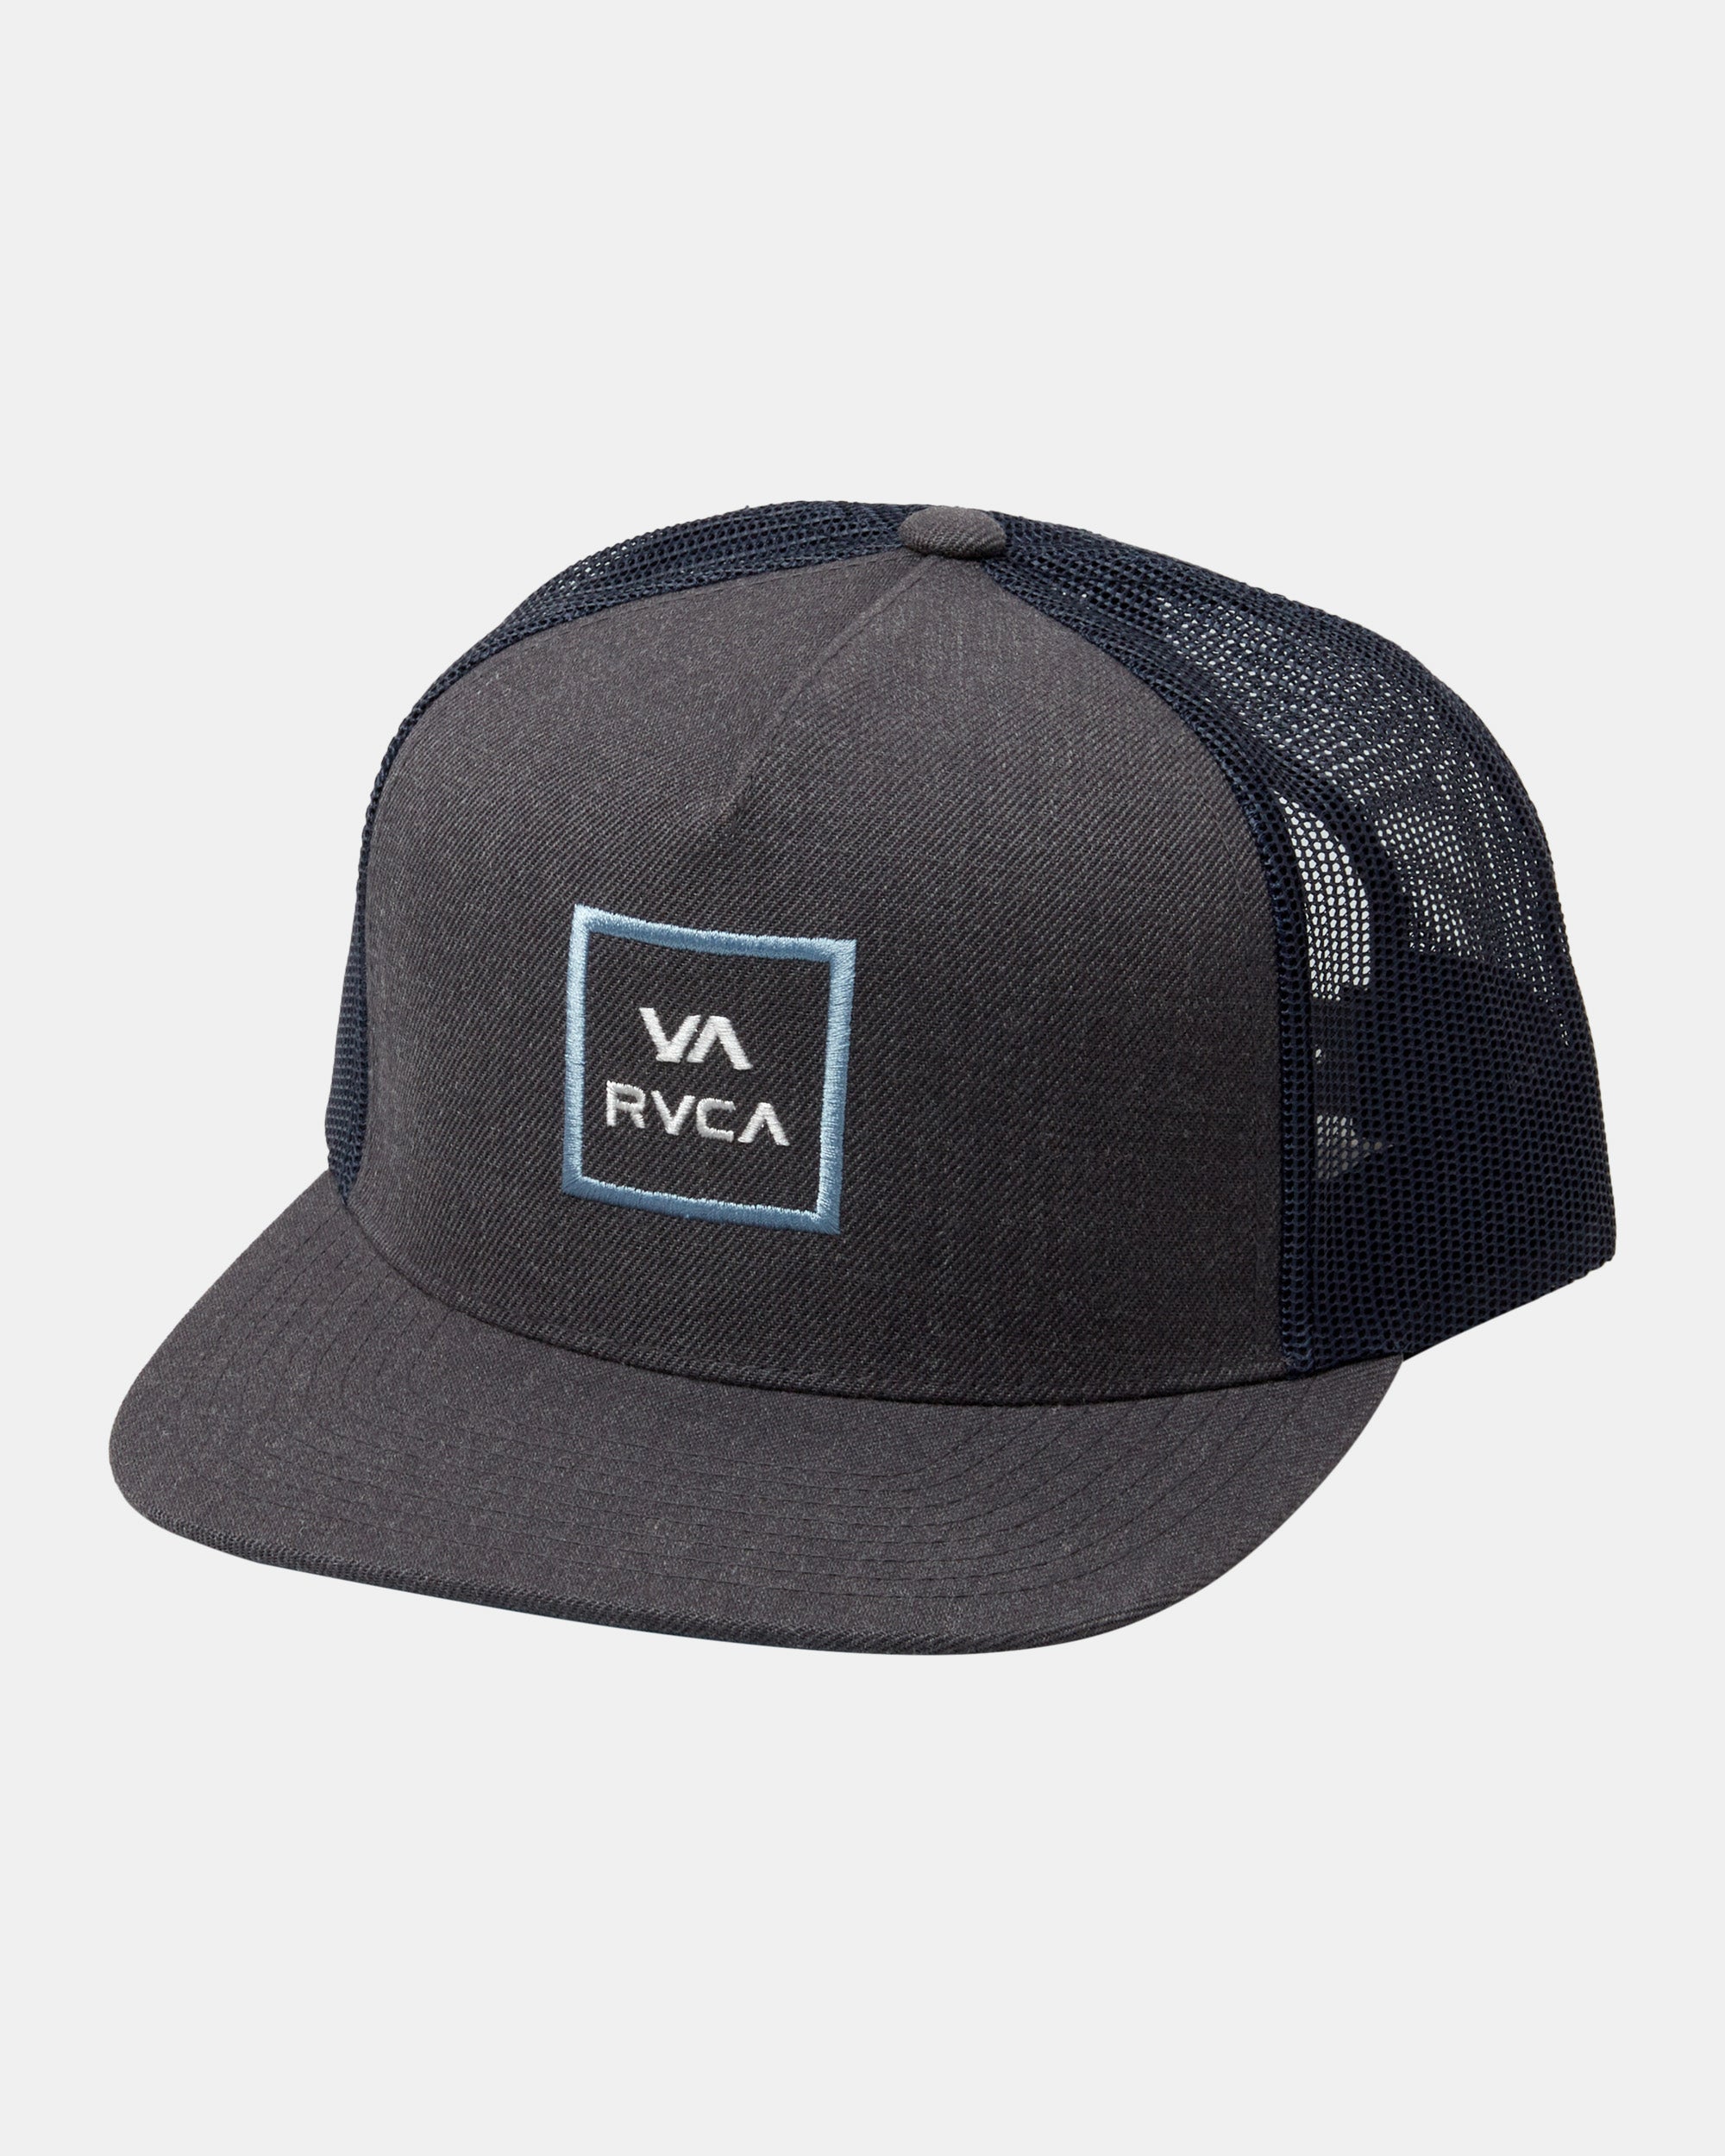 VA All The Way Trucker Hat - Heather Charcoal